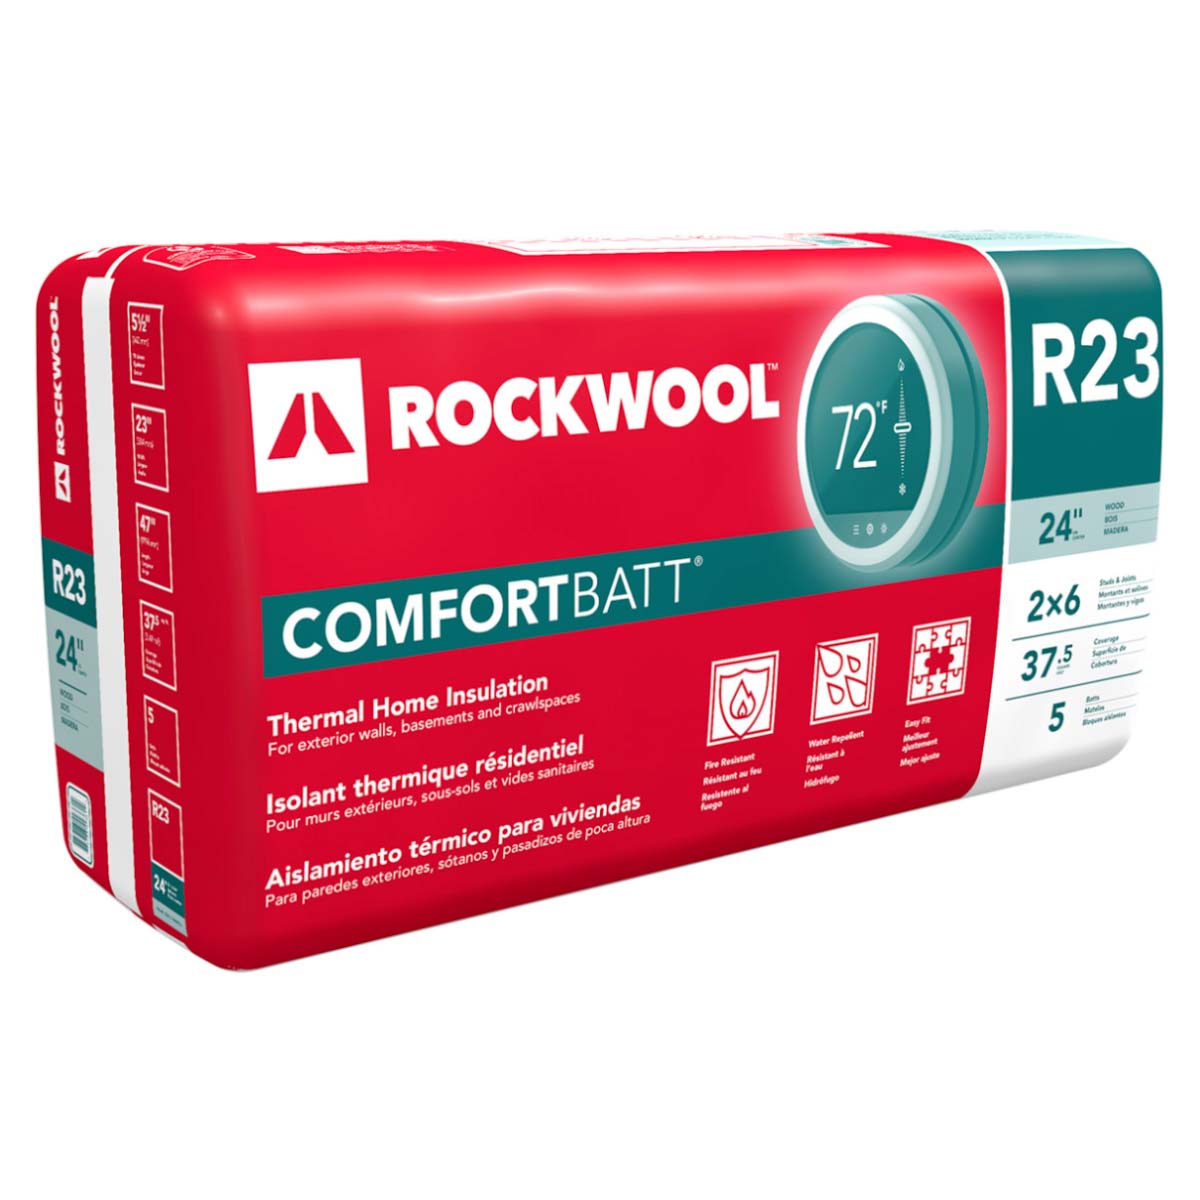 Rockwool Comfortbatt R23 Insulation